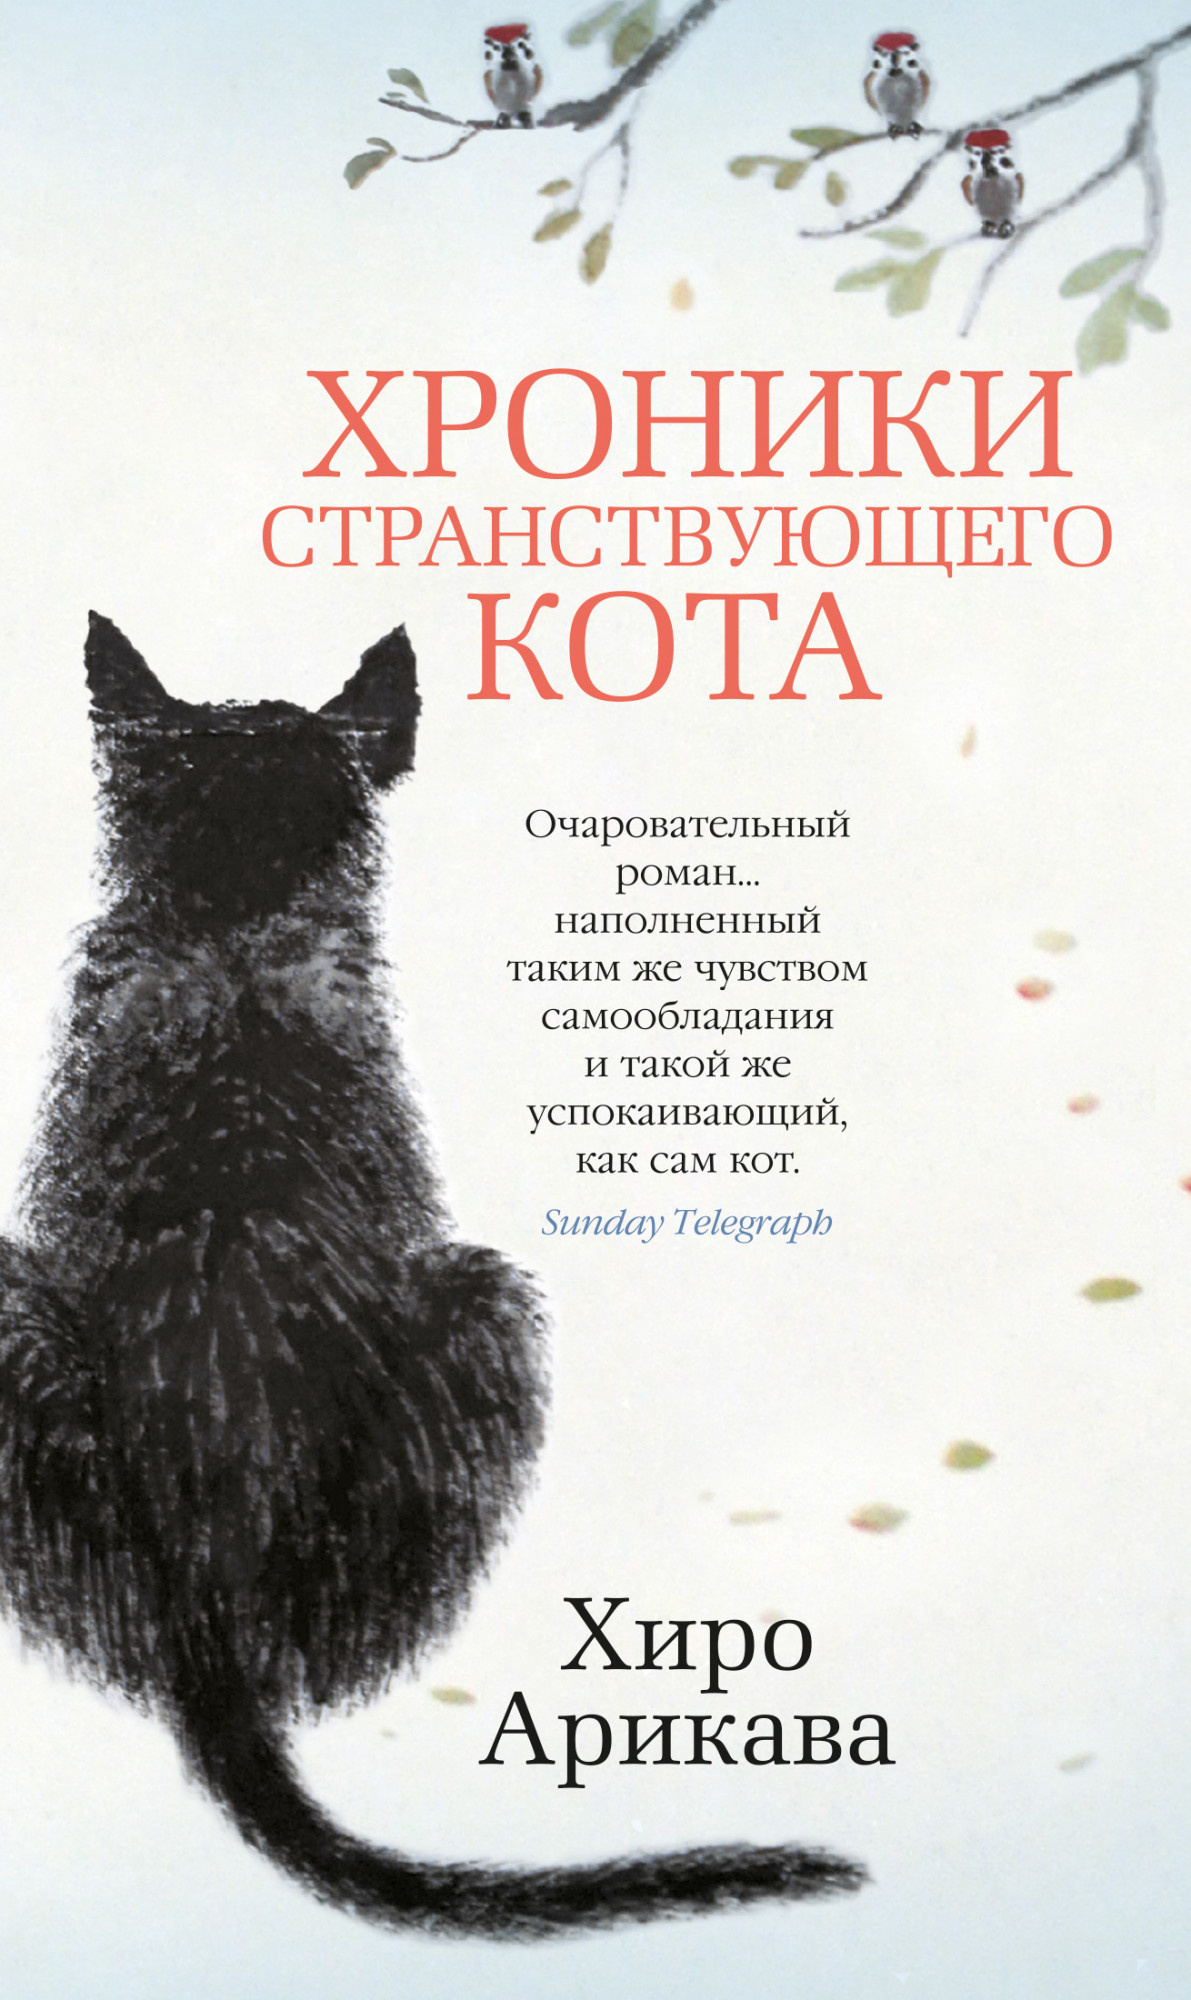 Хроники странствующего кота. Автор — Хиро Арикава. 